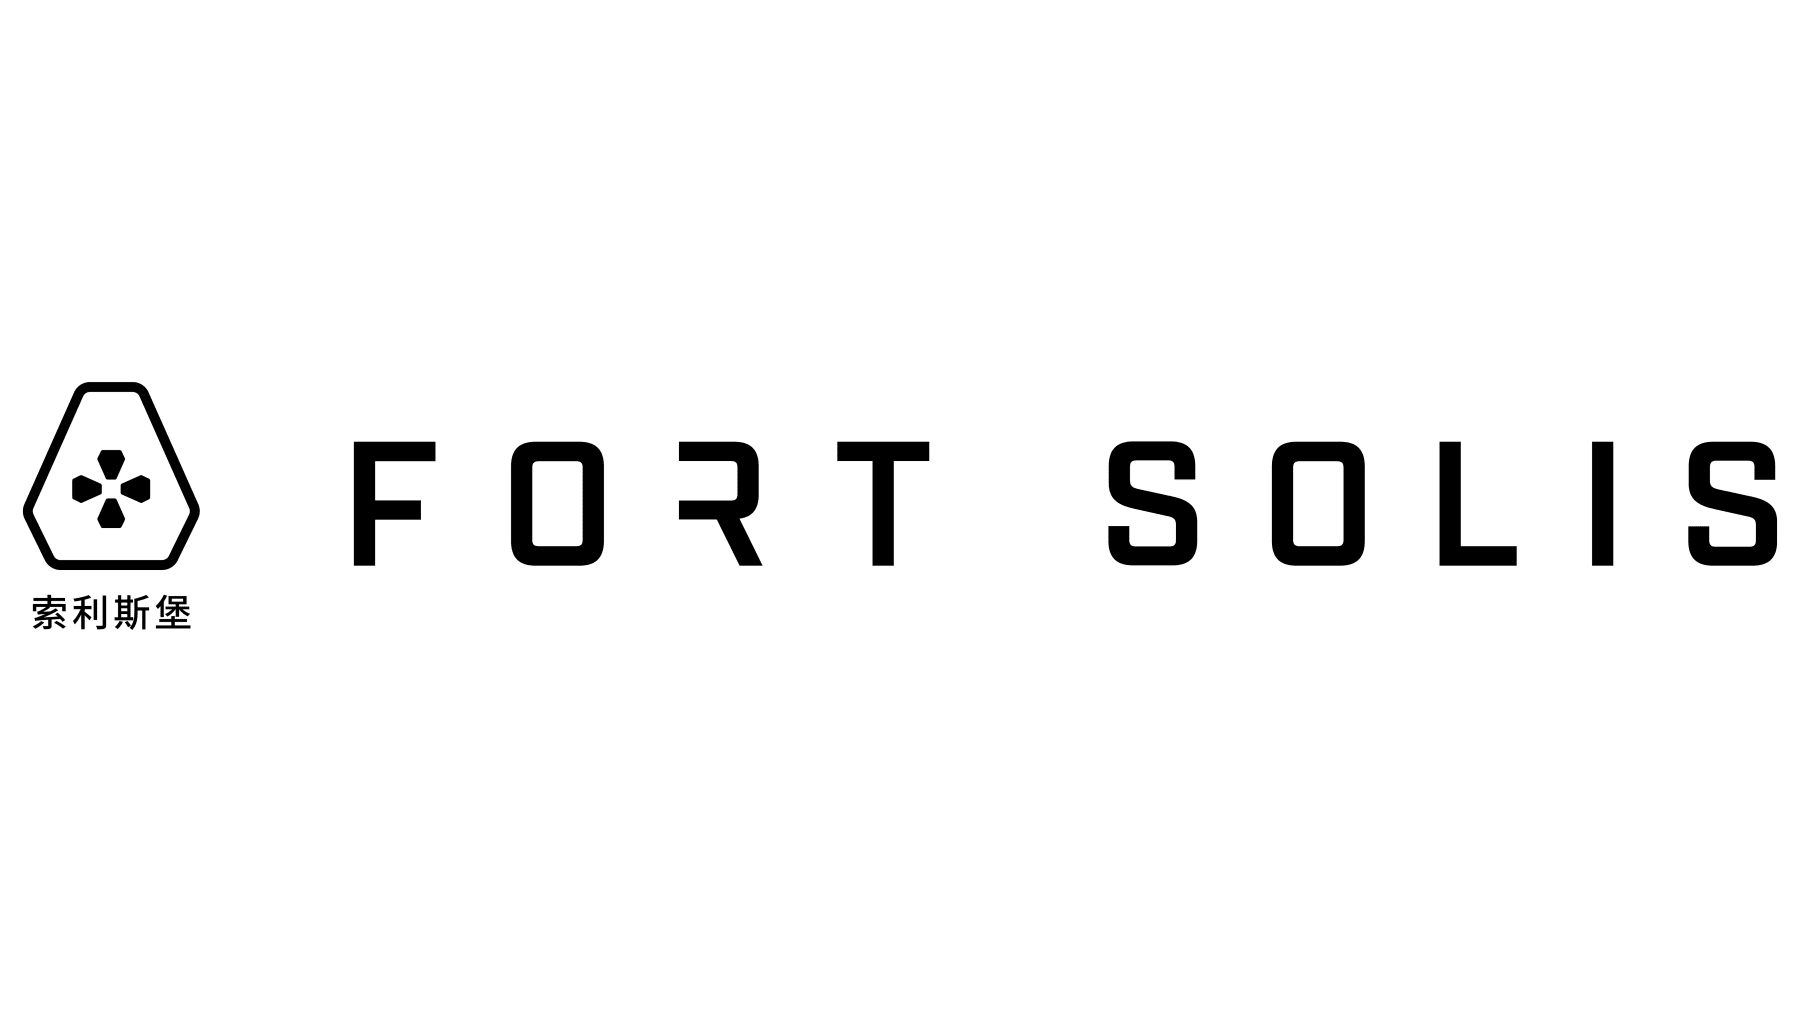 Fort Solis - Official Exclusive Troy Baker Teaser 